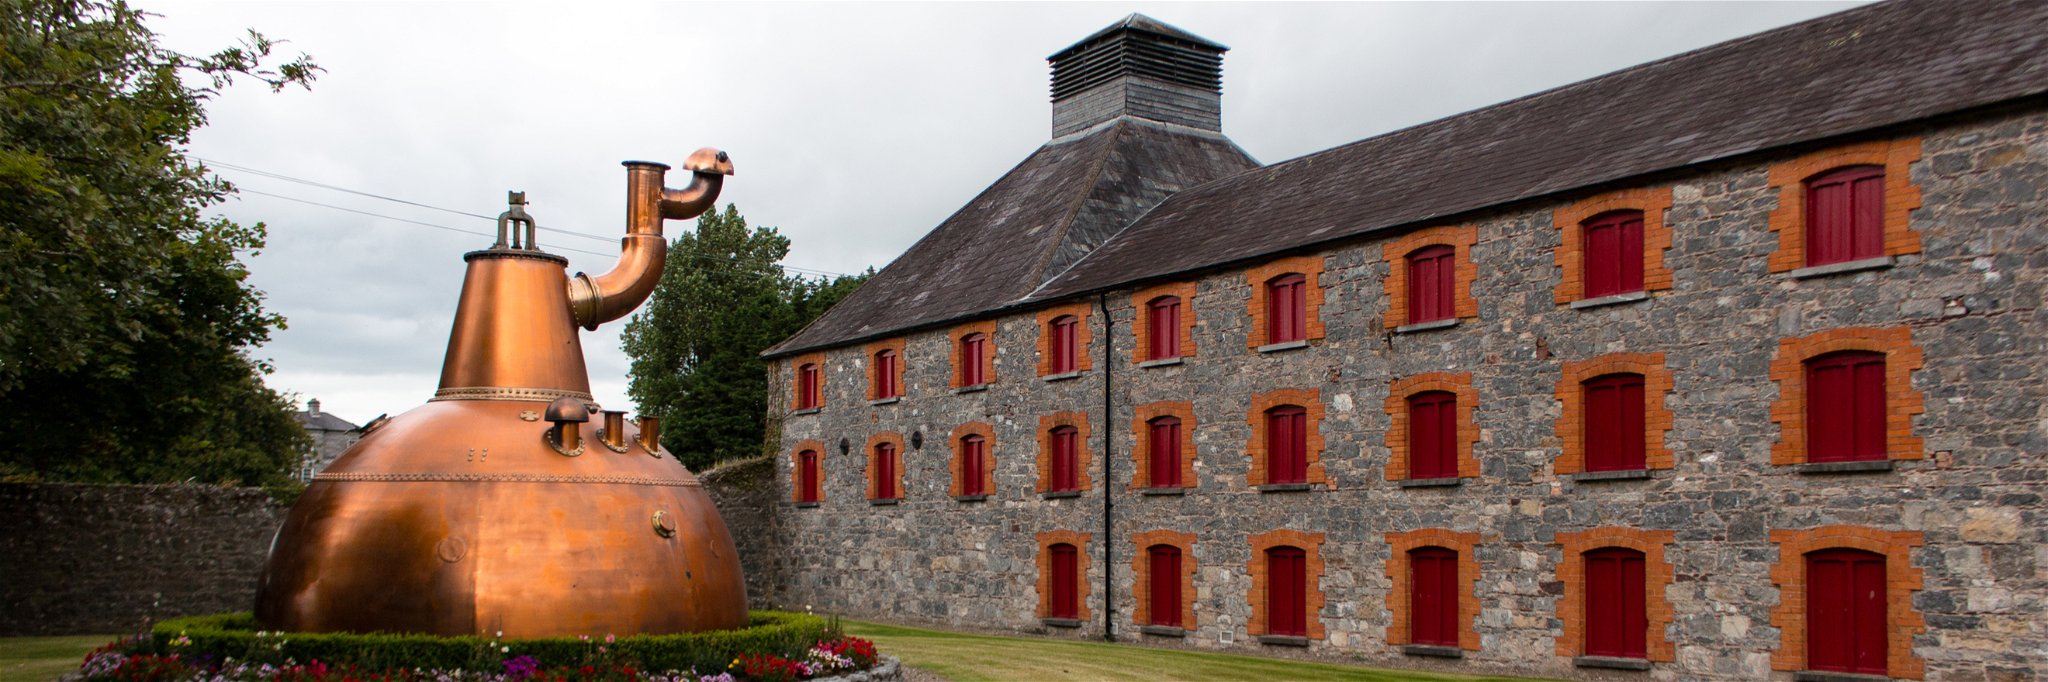 The Old Midleton Distillery in Ireland.